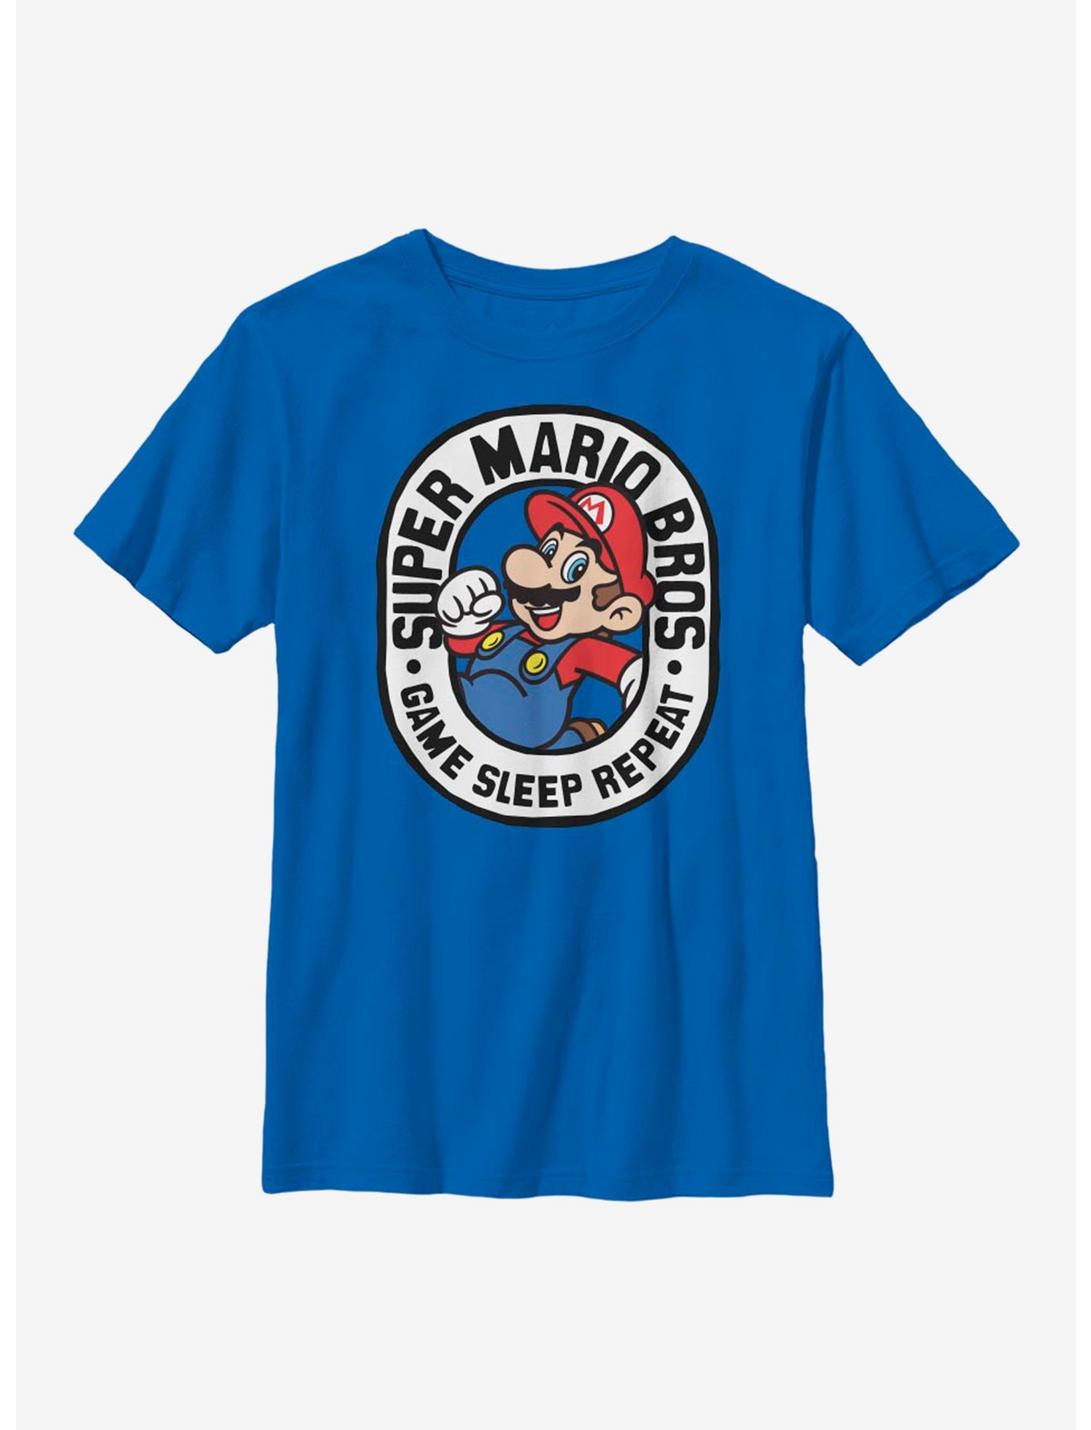 Nintendo Super Mario Game Crest Youth T-Shirt, ROYAL, hi-res